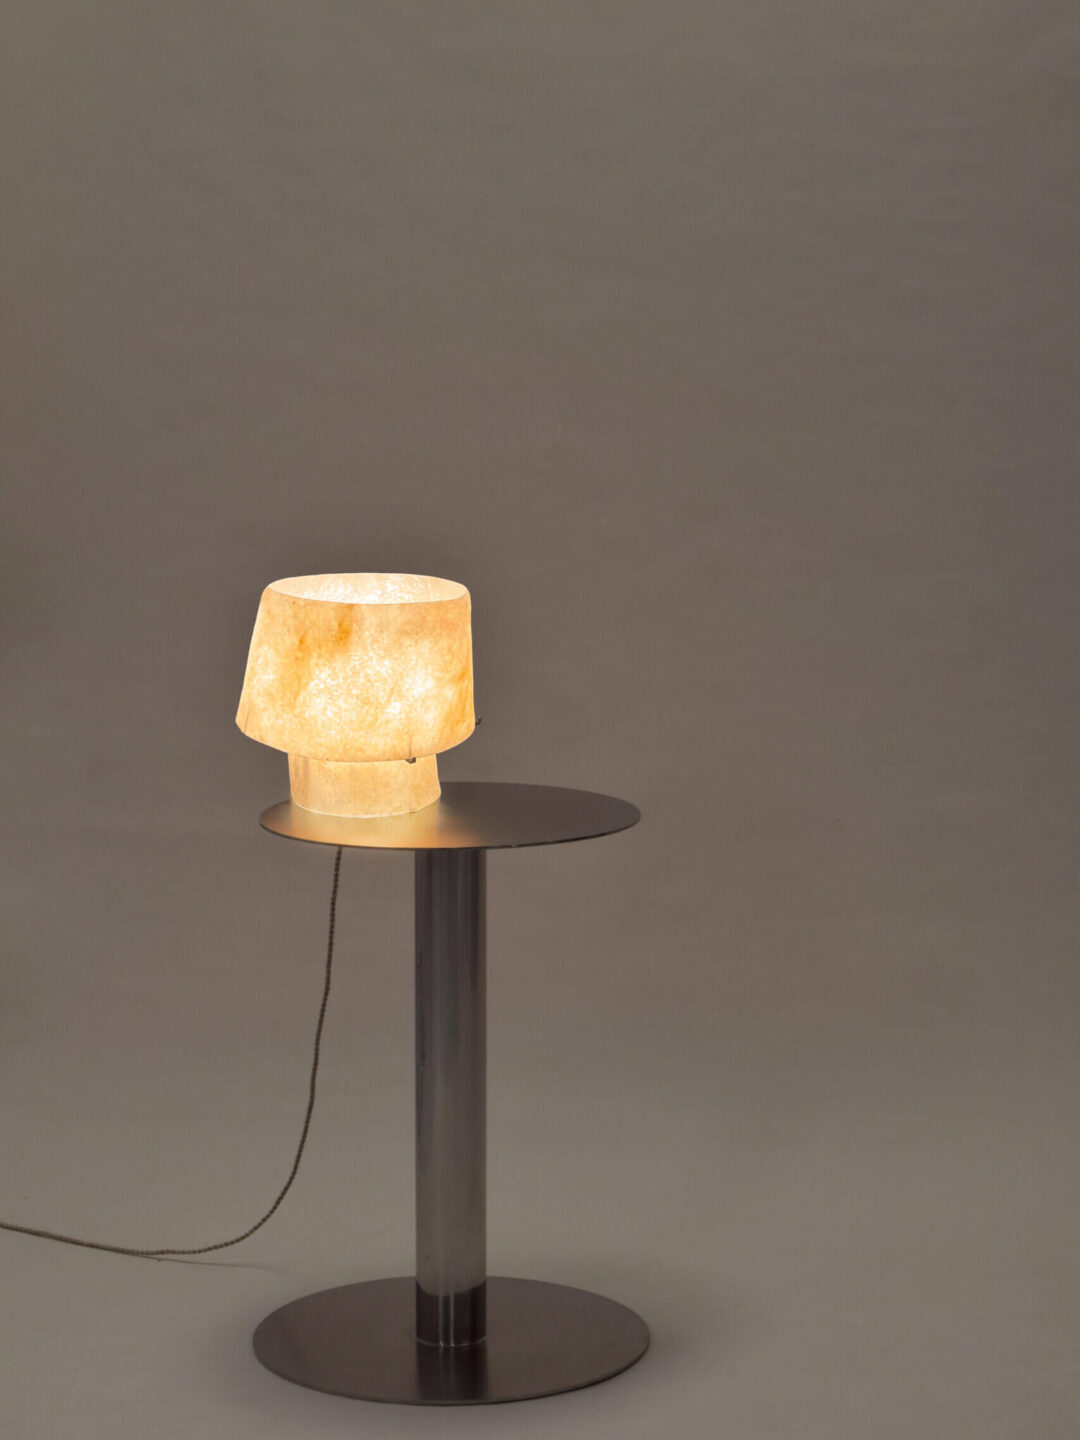 Kilzi lighting | Mush Tiny fiberglass table lamp, a elegant designer lamp with soft organic shapes resembling a growing mushroom. Perfect for home decor.